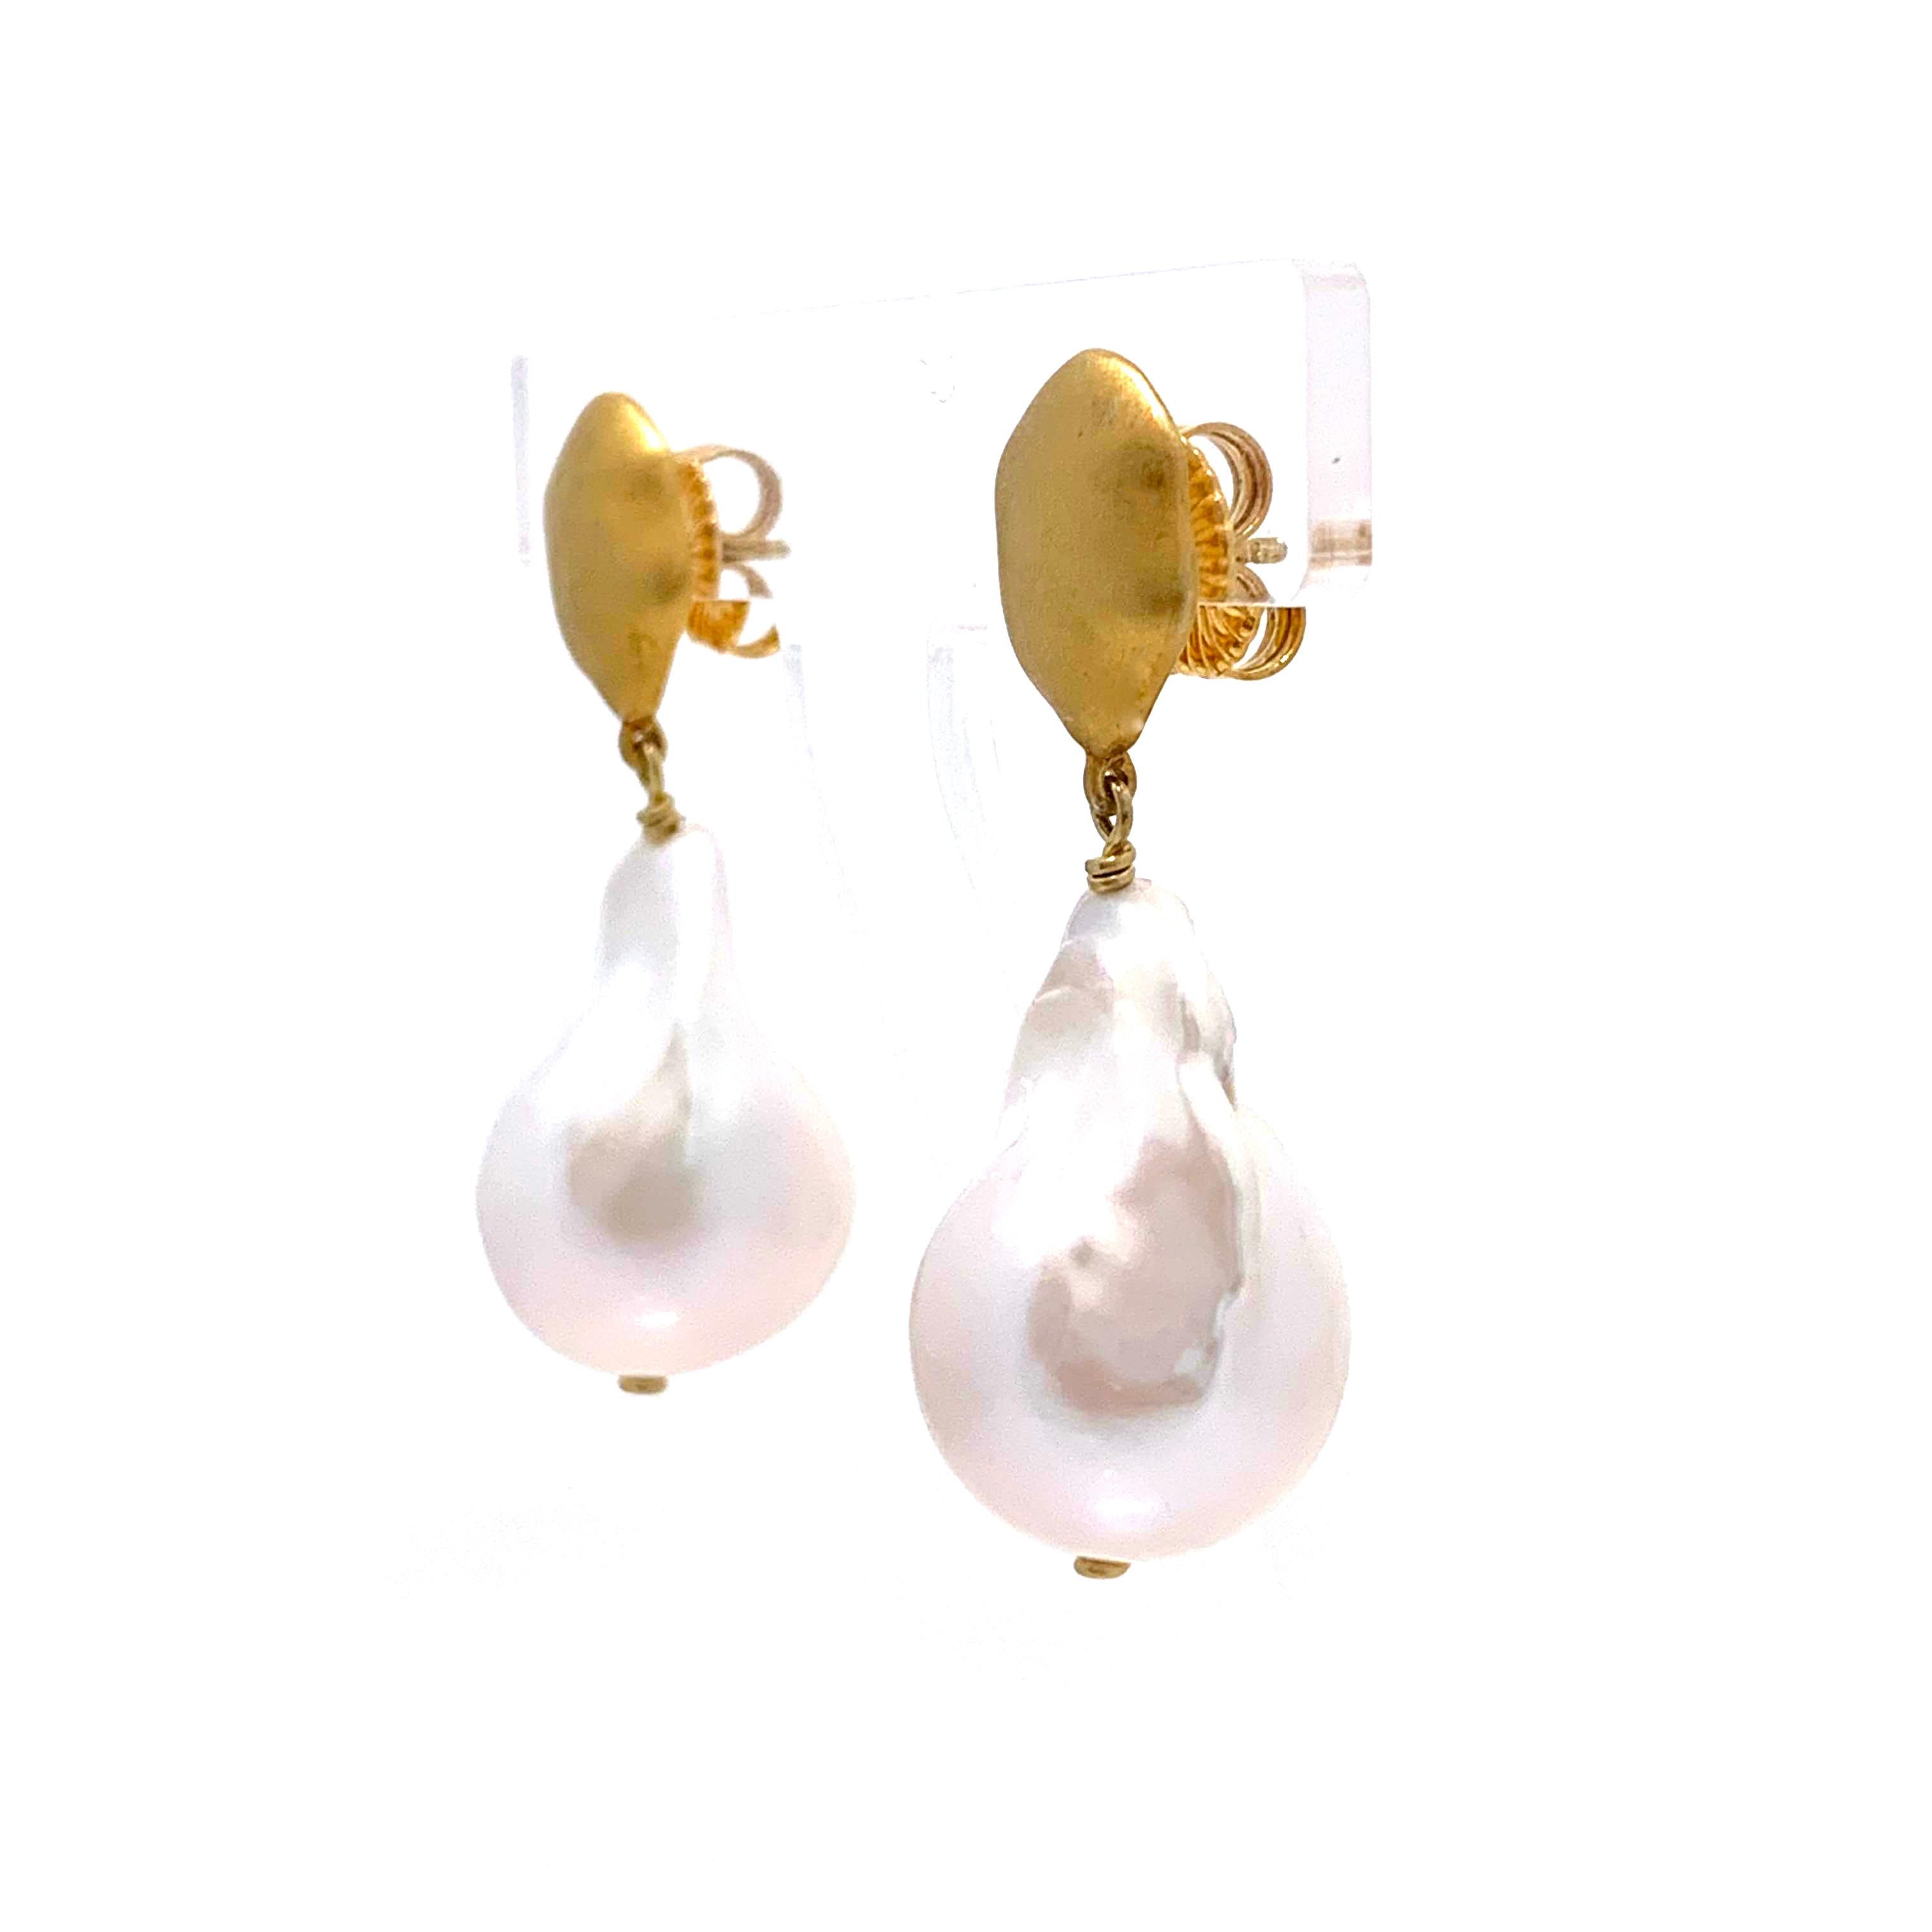 Modern Large Lustrous pair of 18mm Cultured Baroque Pearl Drop Earrings